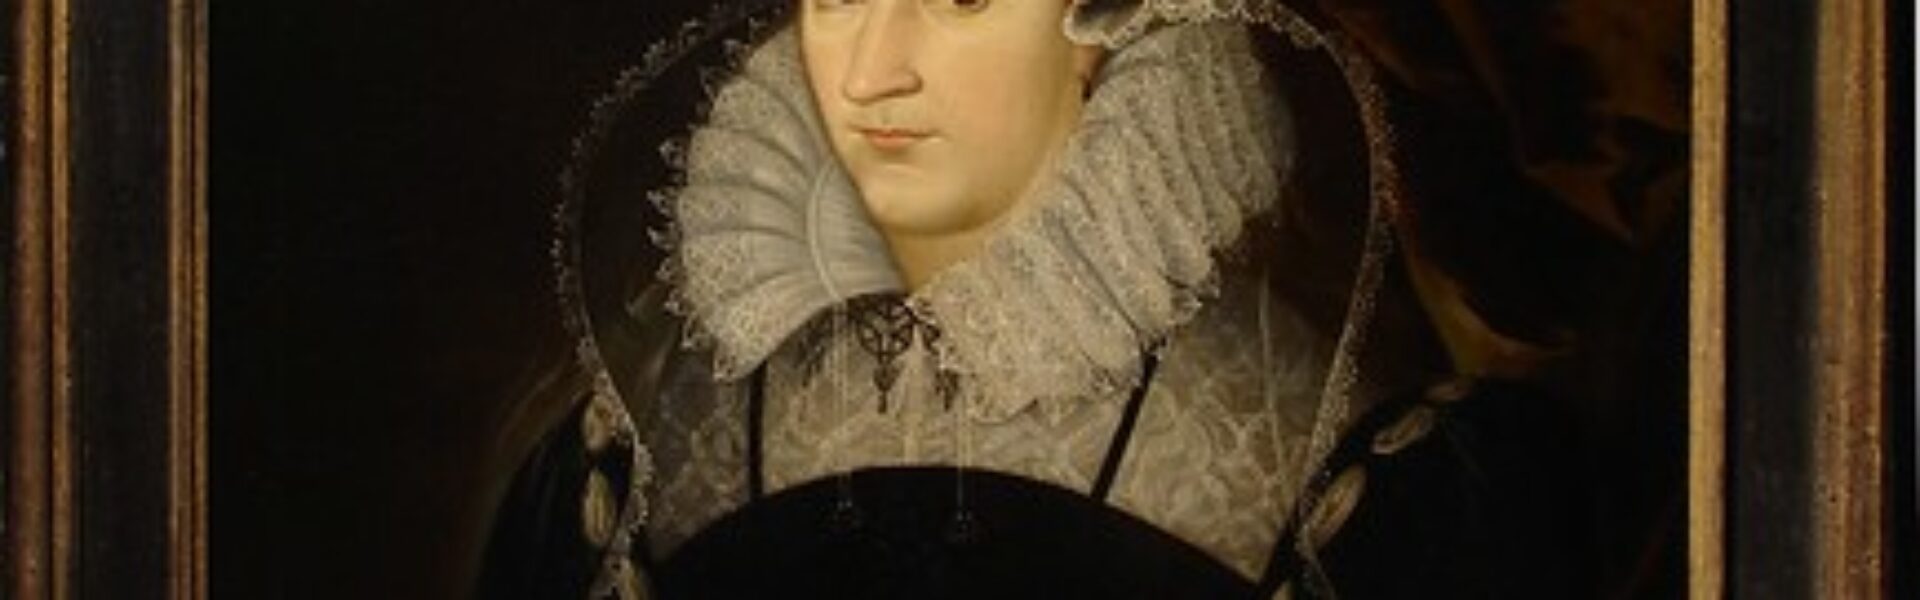 Mary, Queen of Scots, granddaughter of Margaret Tudor